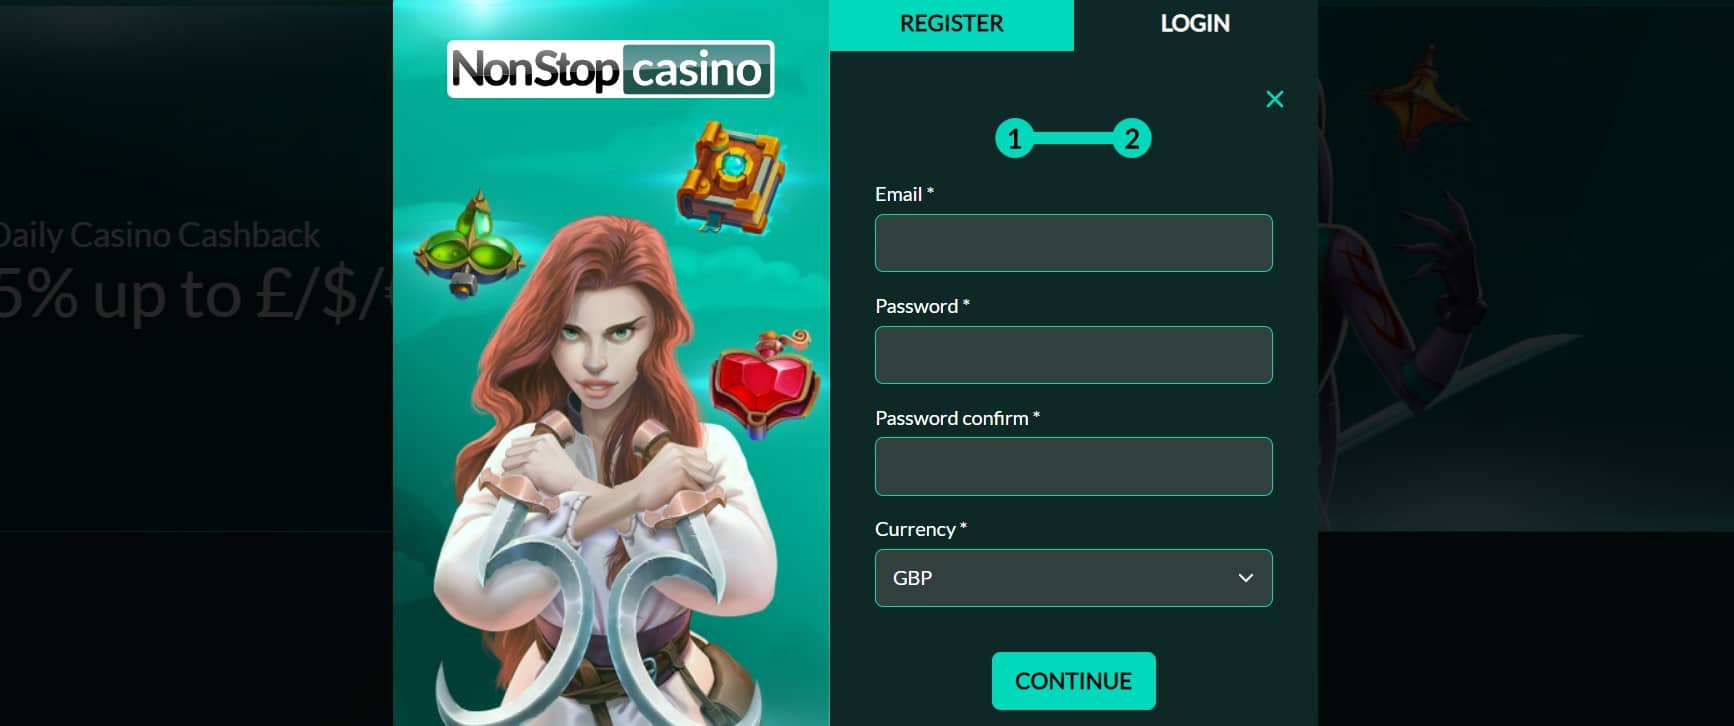 nonstop casino register